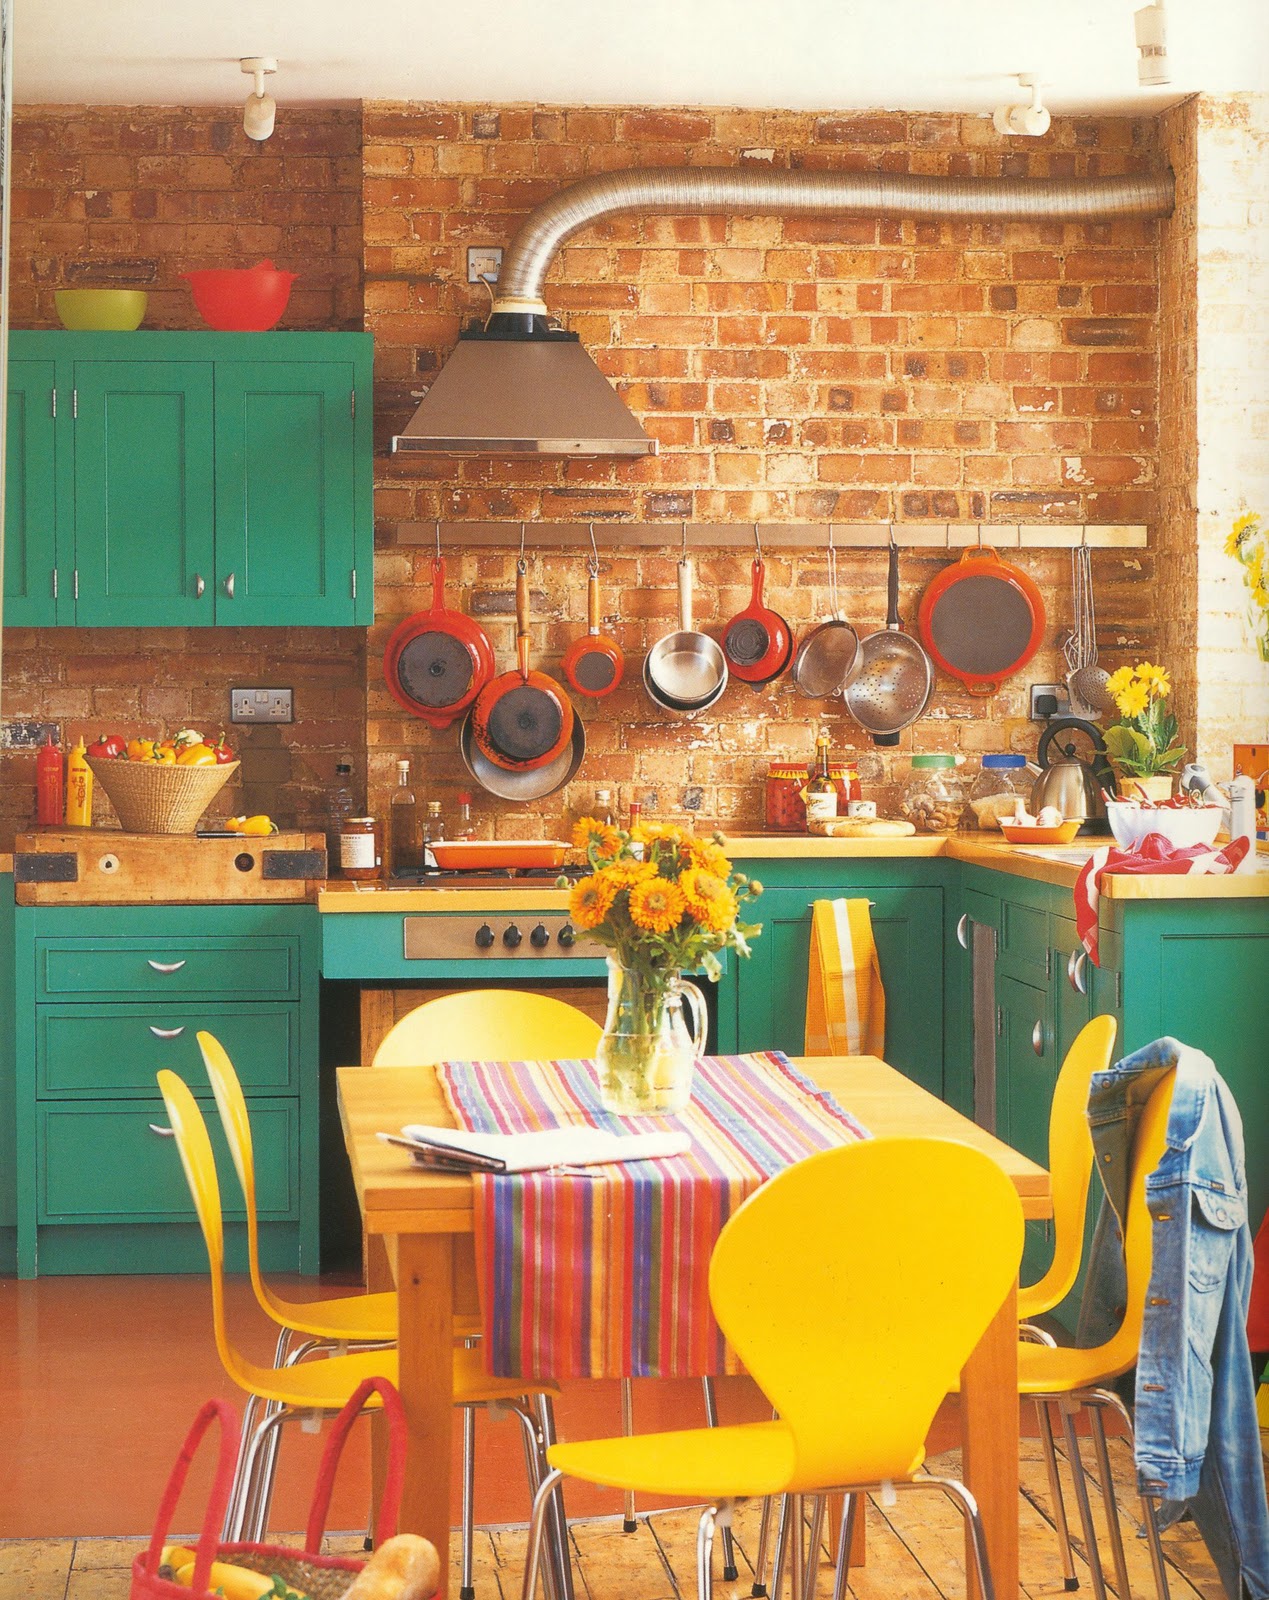  kitchen design colors ideas inspiration decorating